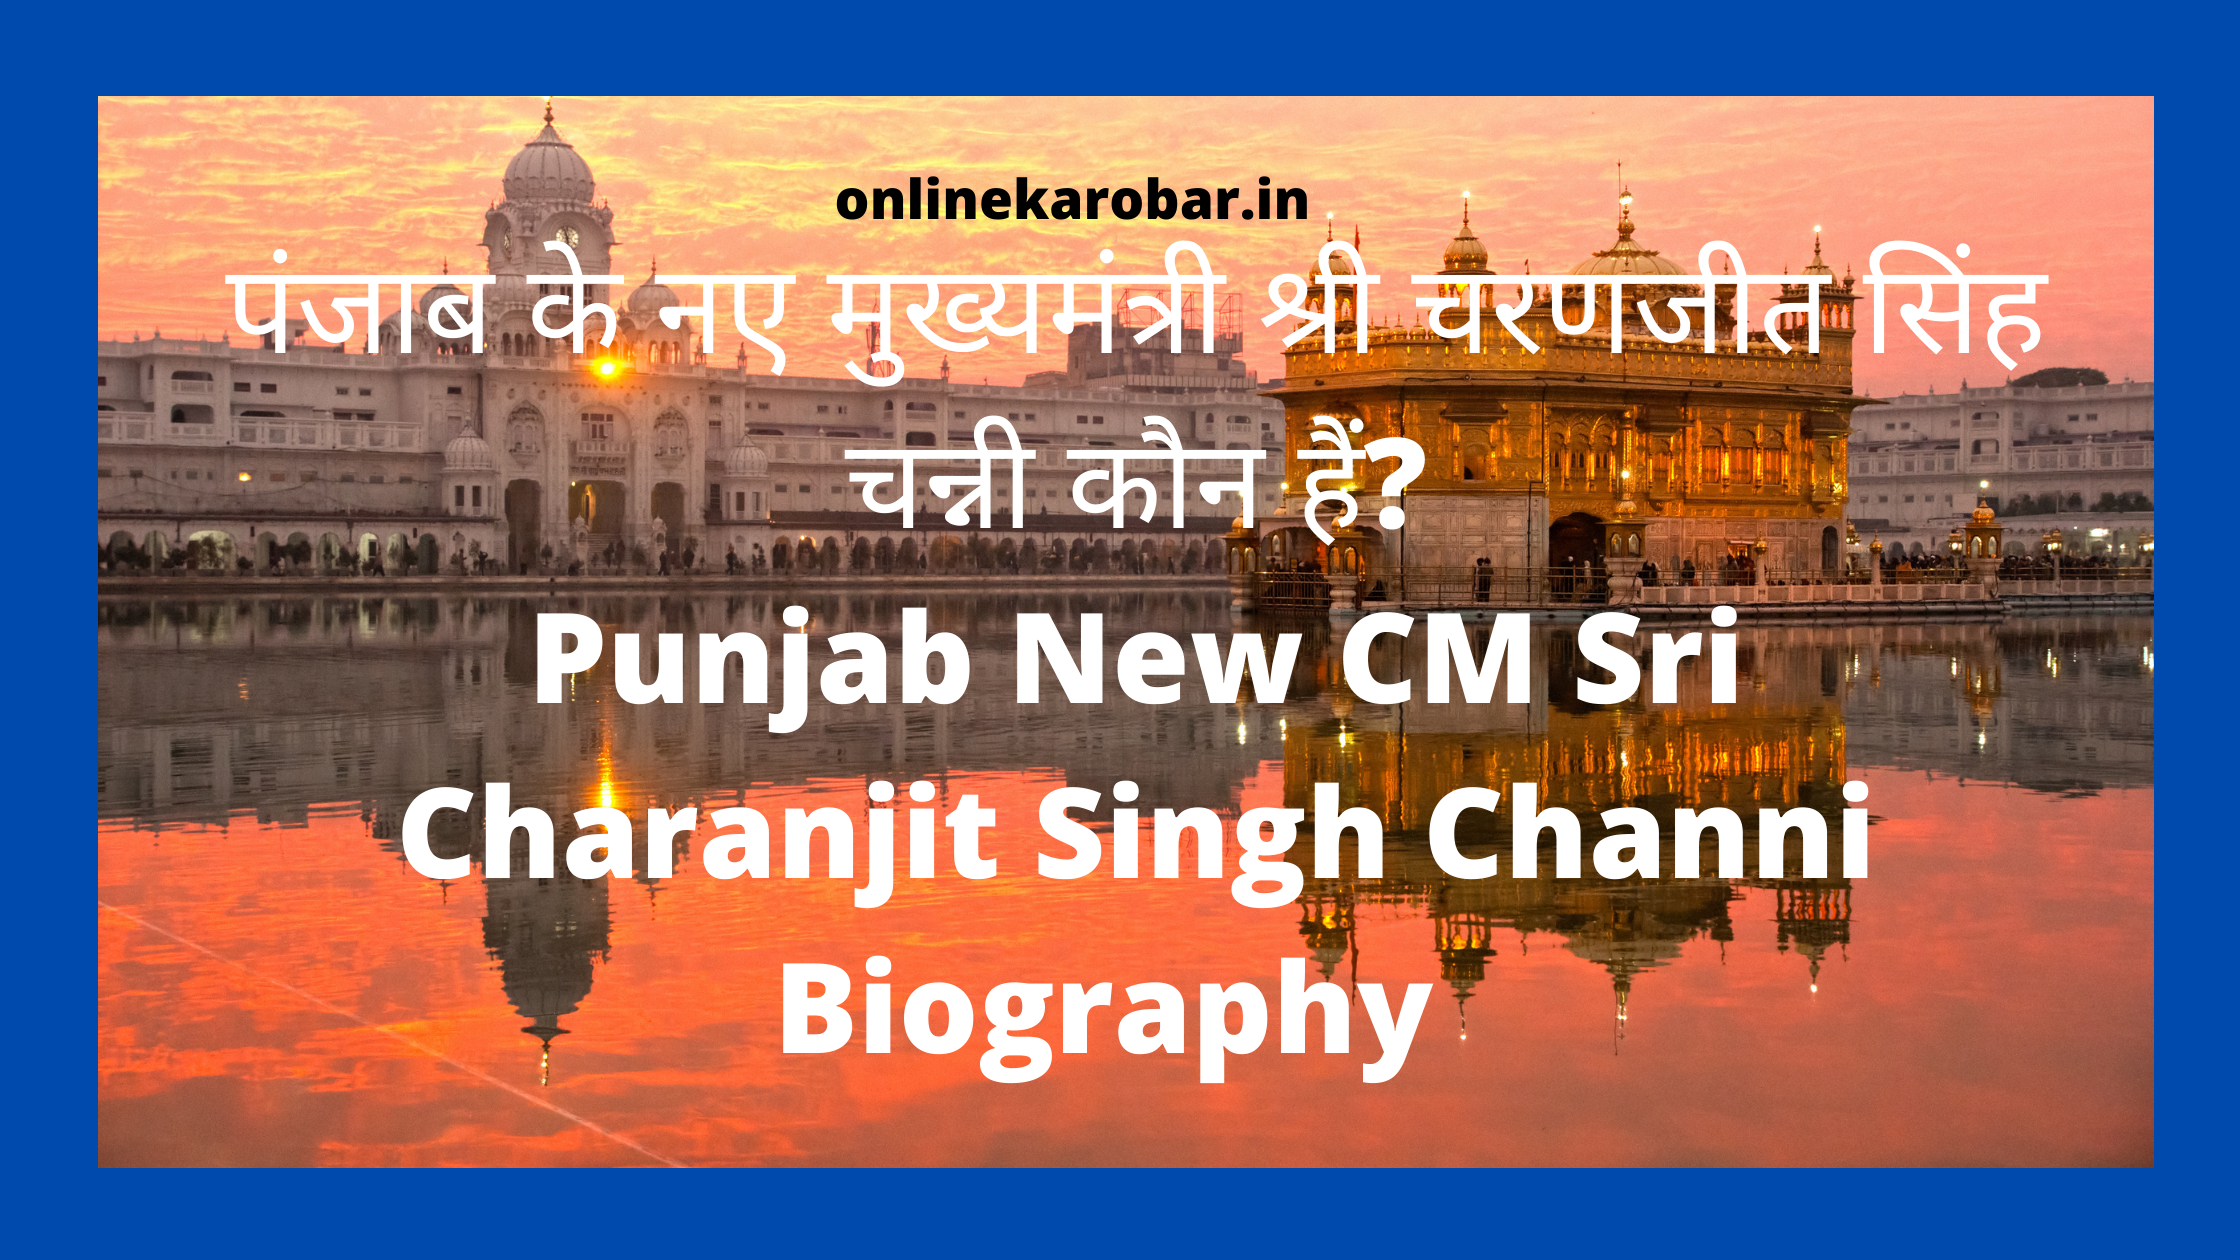 Charanjit Singh Channi biography